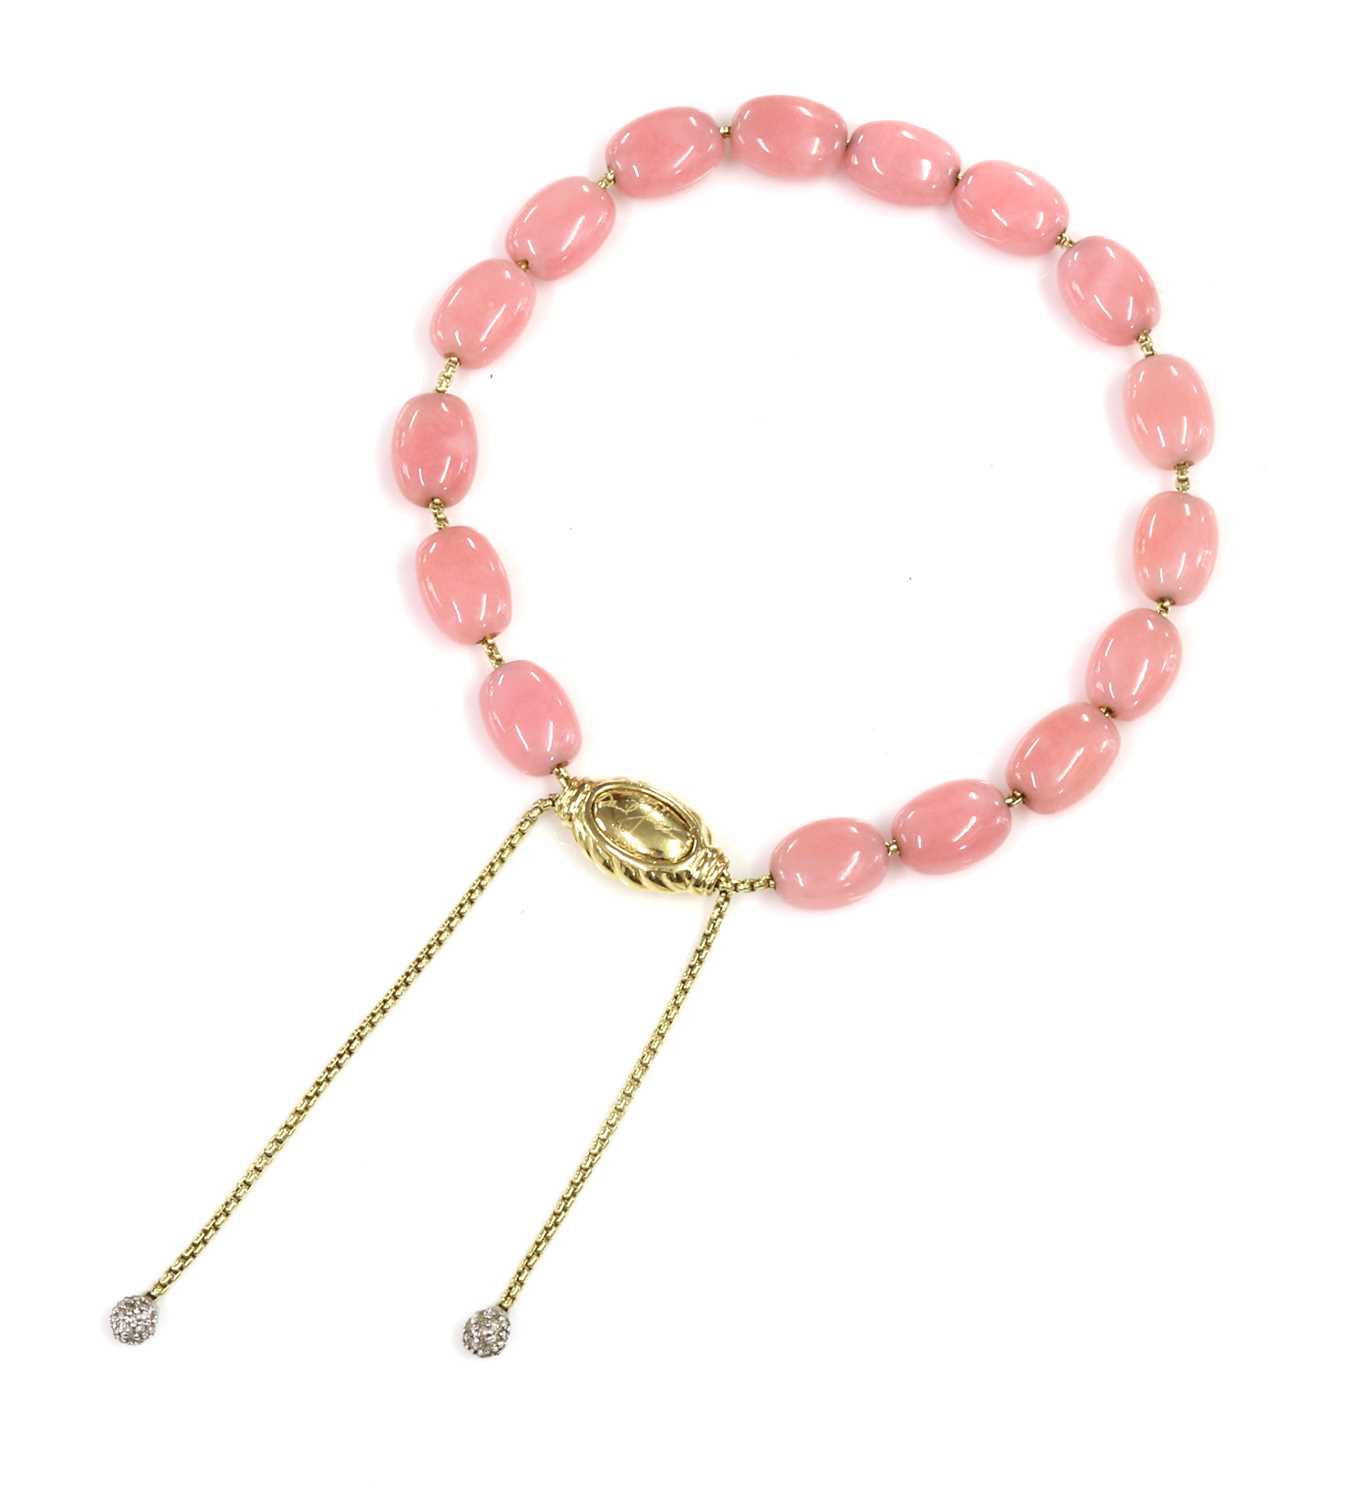 Lot 358 - A gold, pink opal and diamond 'Spirituality' bracelet, by David Yurman, c.2007